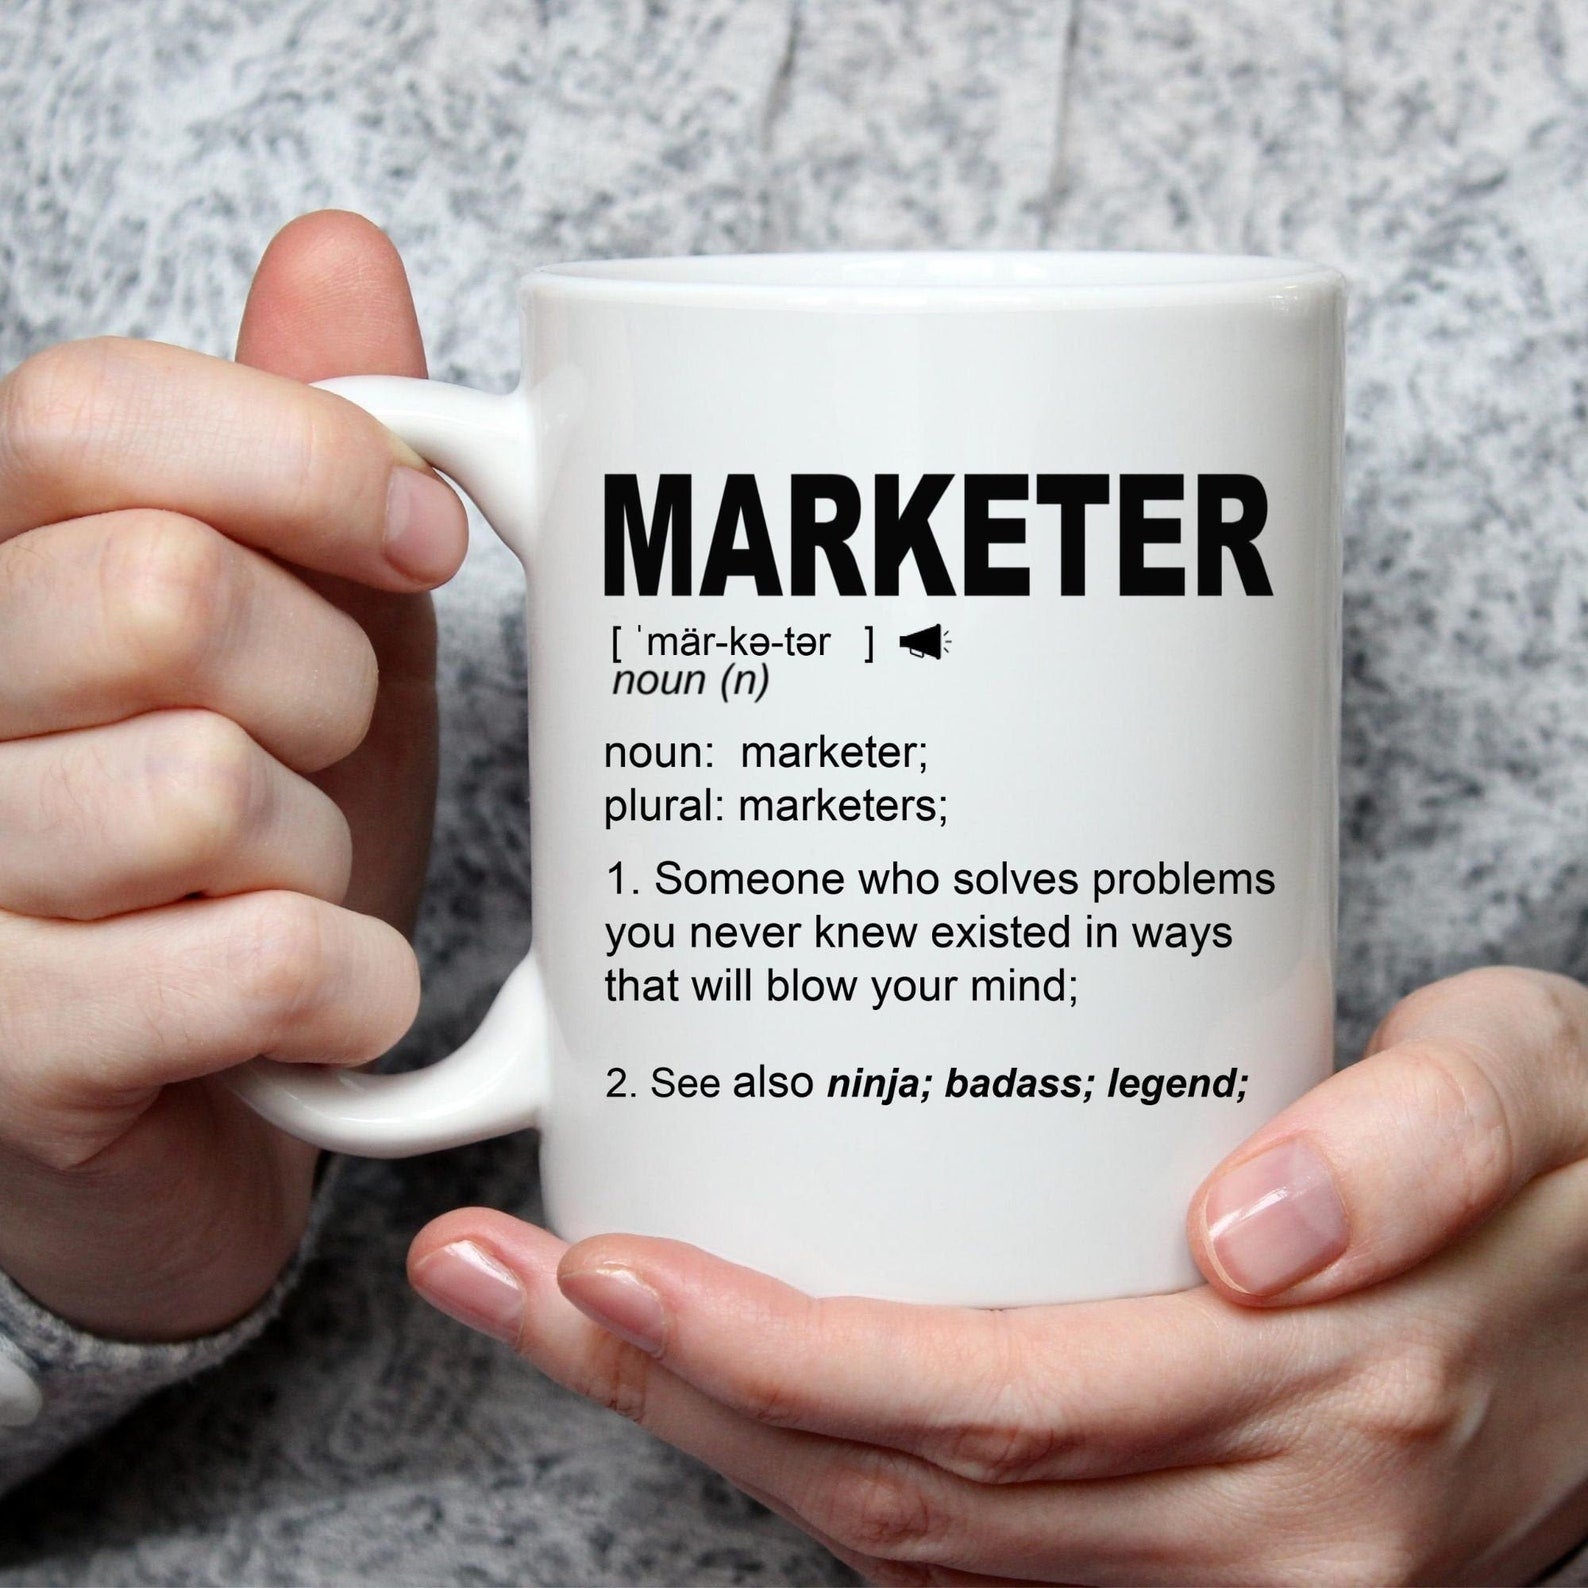 Marketer - Mug (Set of 5 Piece)